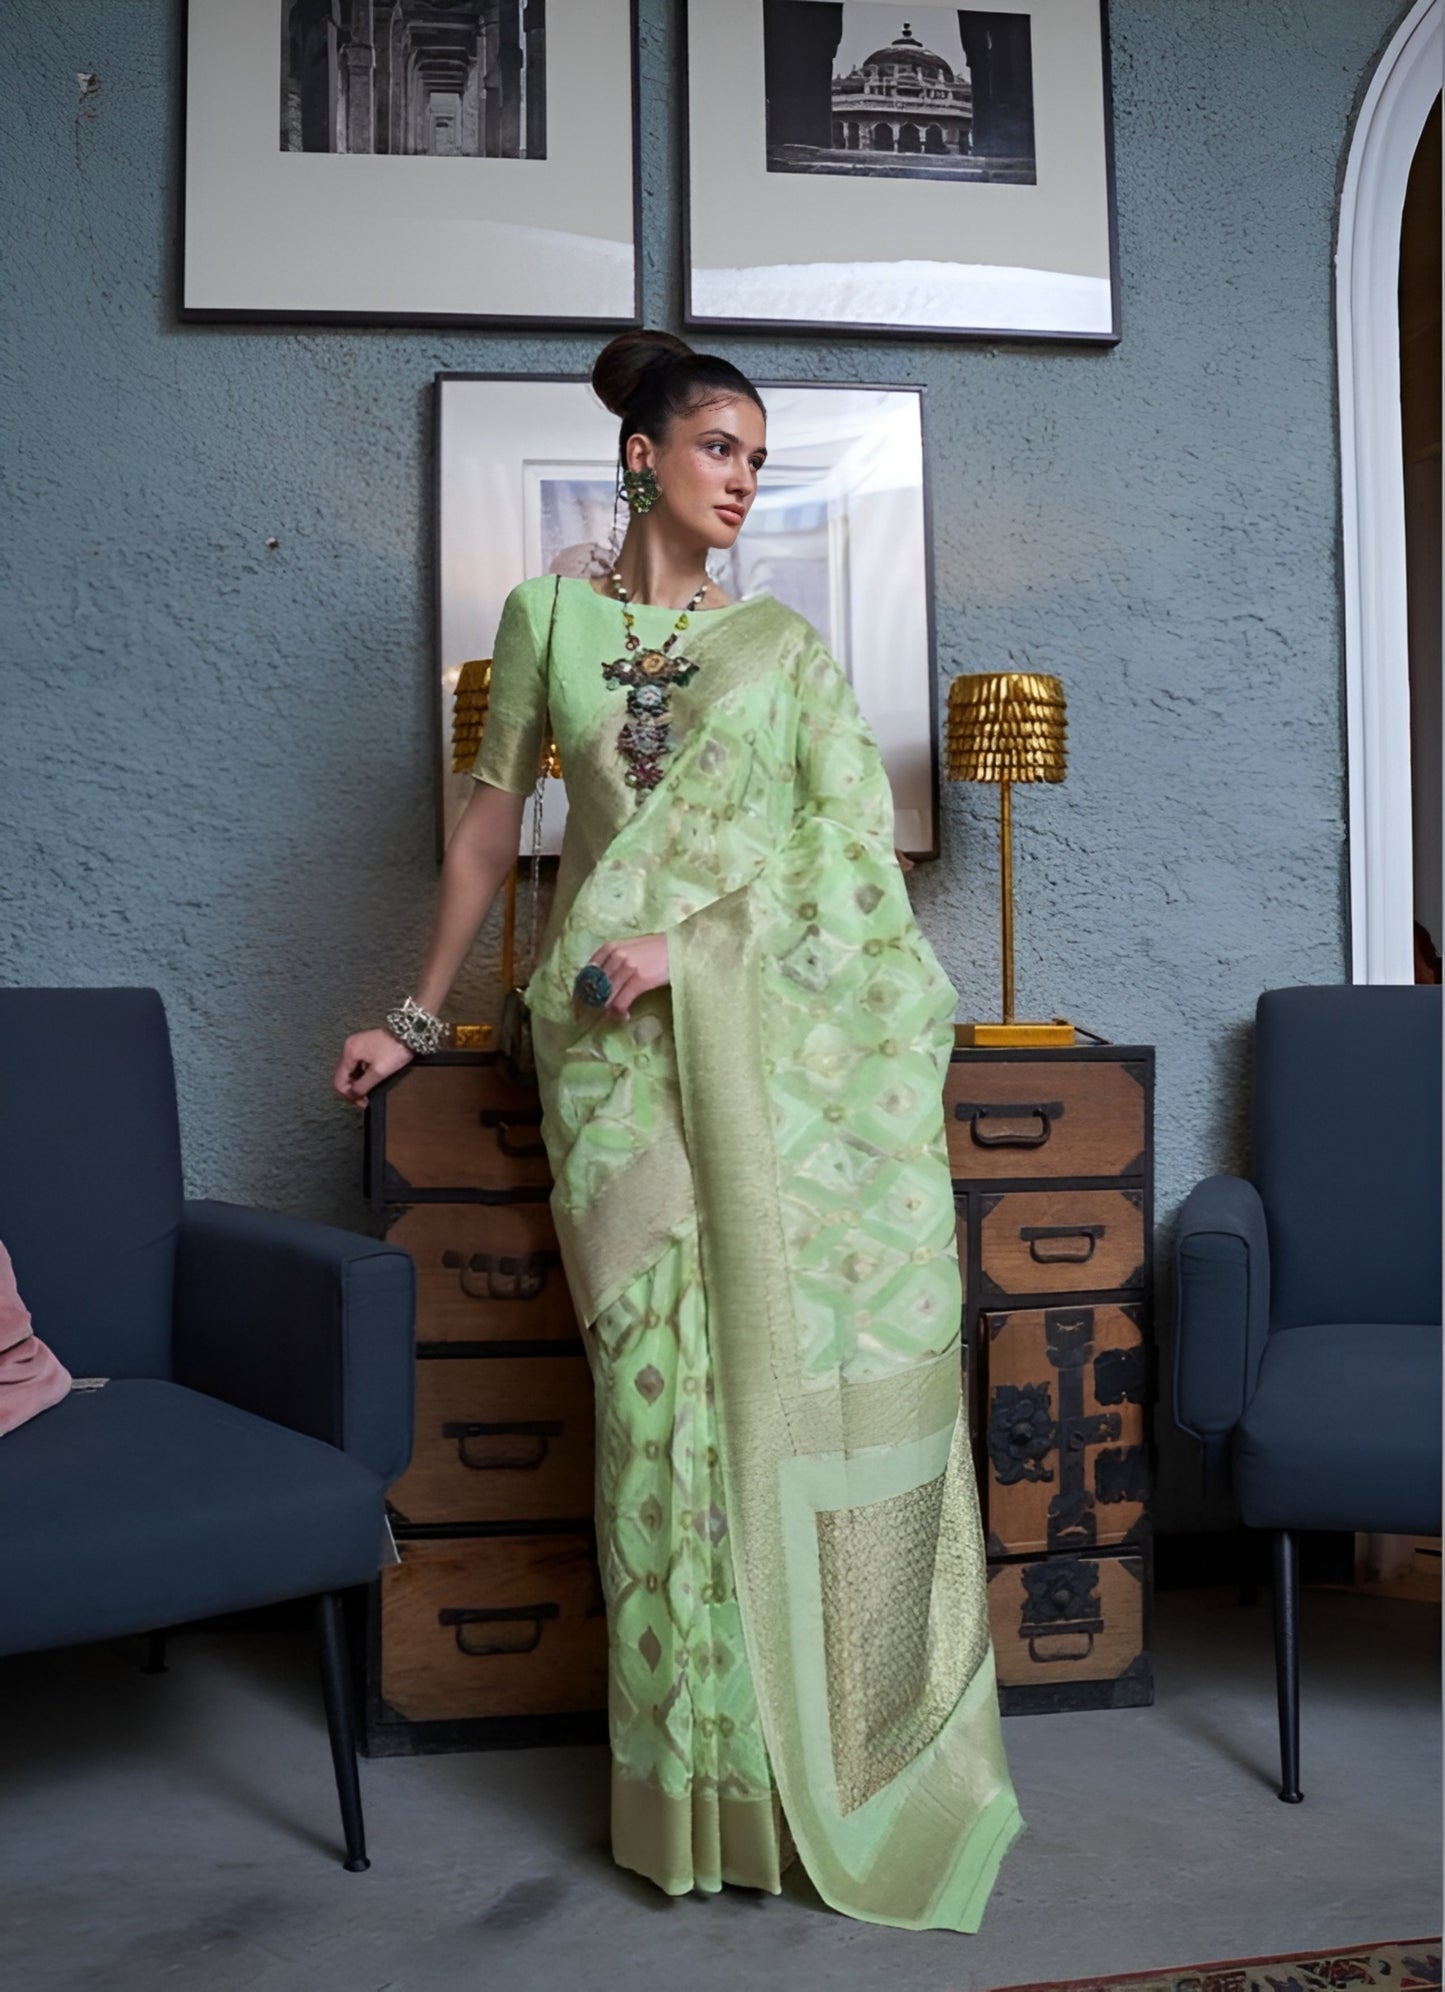 EKKTARA Saree For Women Pista Colour Pure Linen IKAT Handloom Weaving Saree With Unstitched Blouse